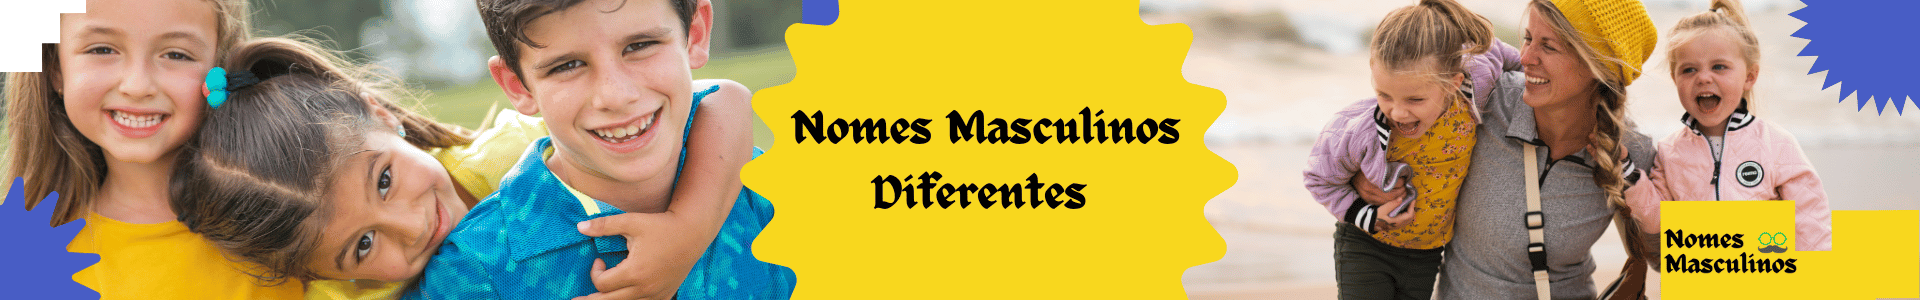 Nomes Masculinos Diferentes